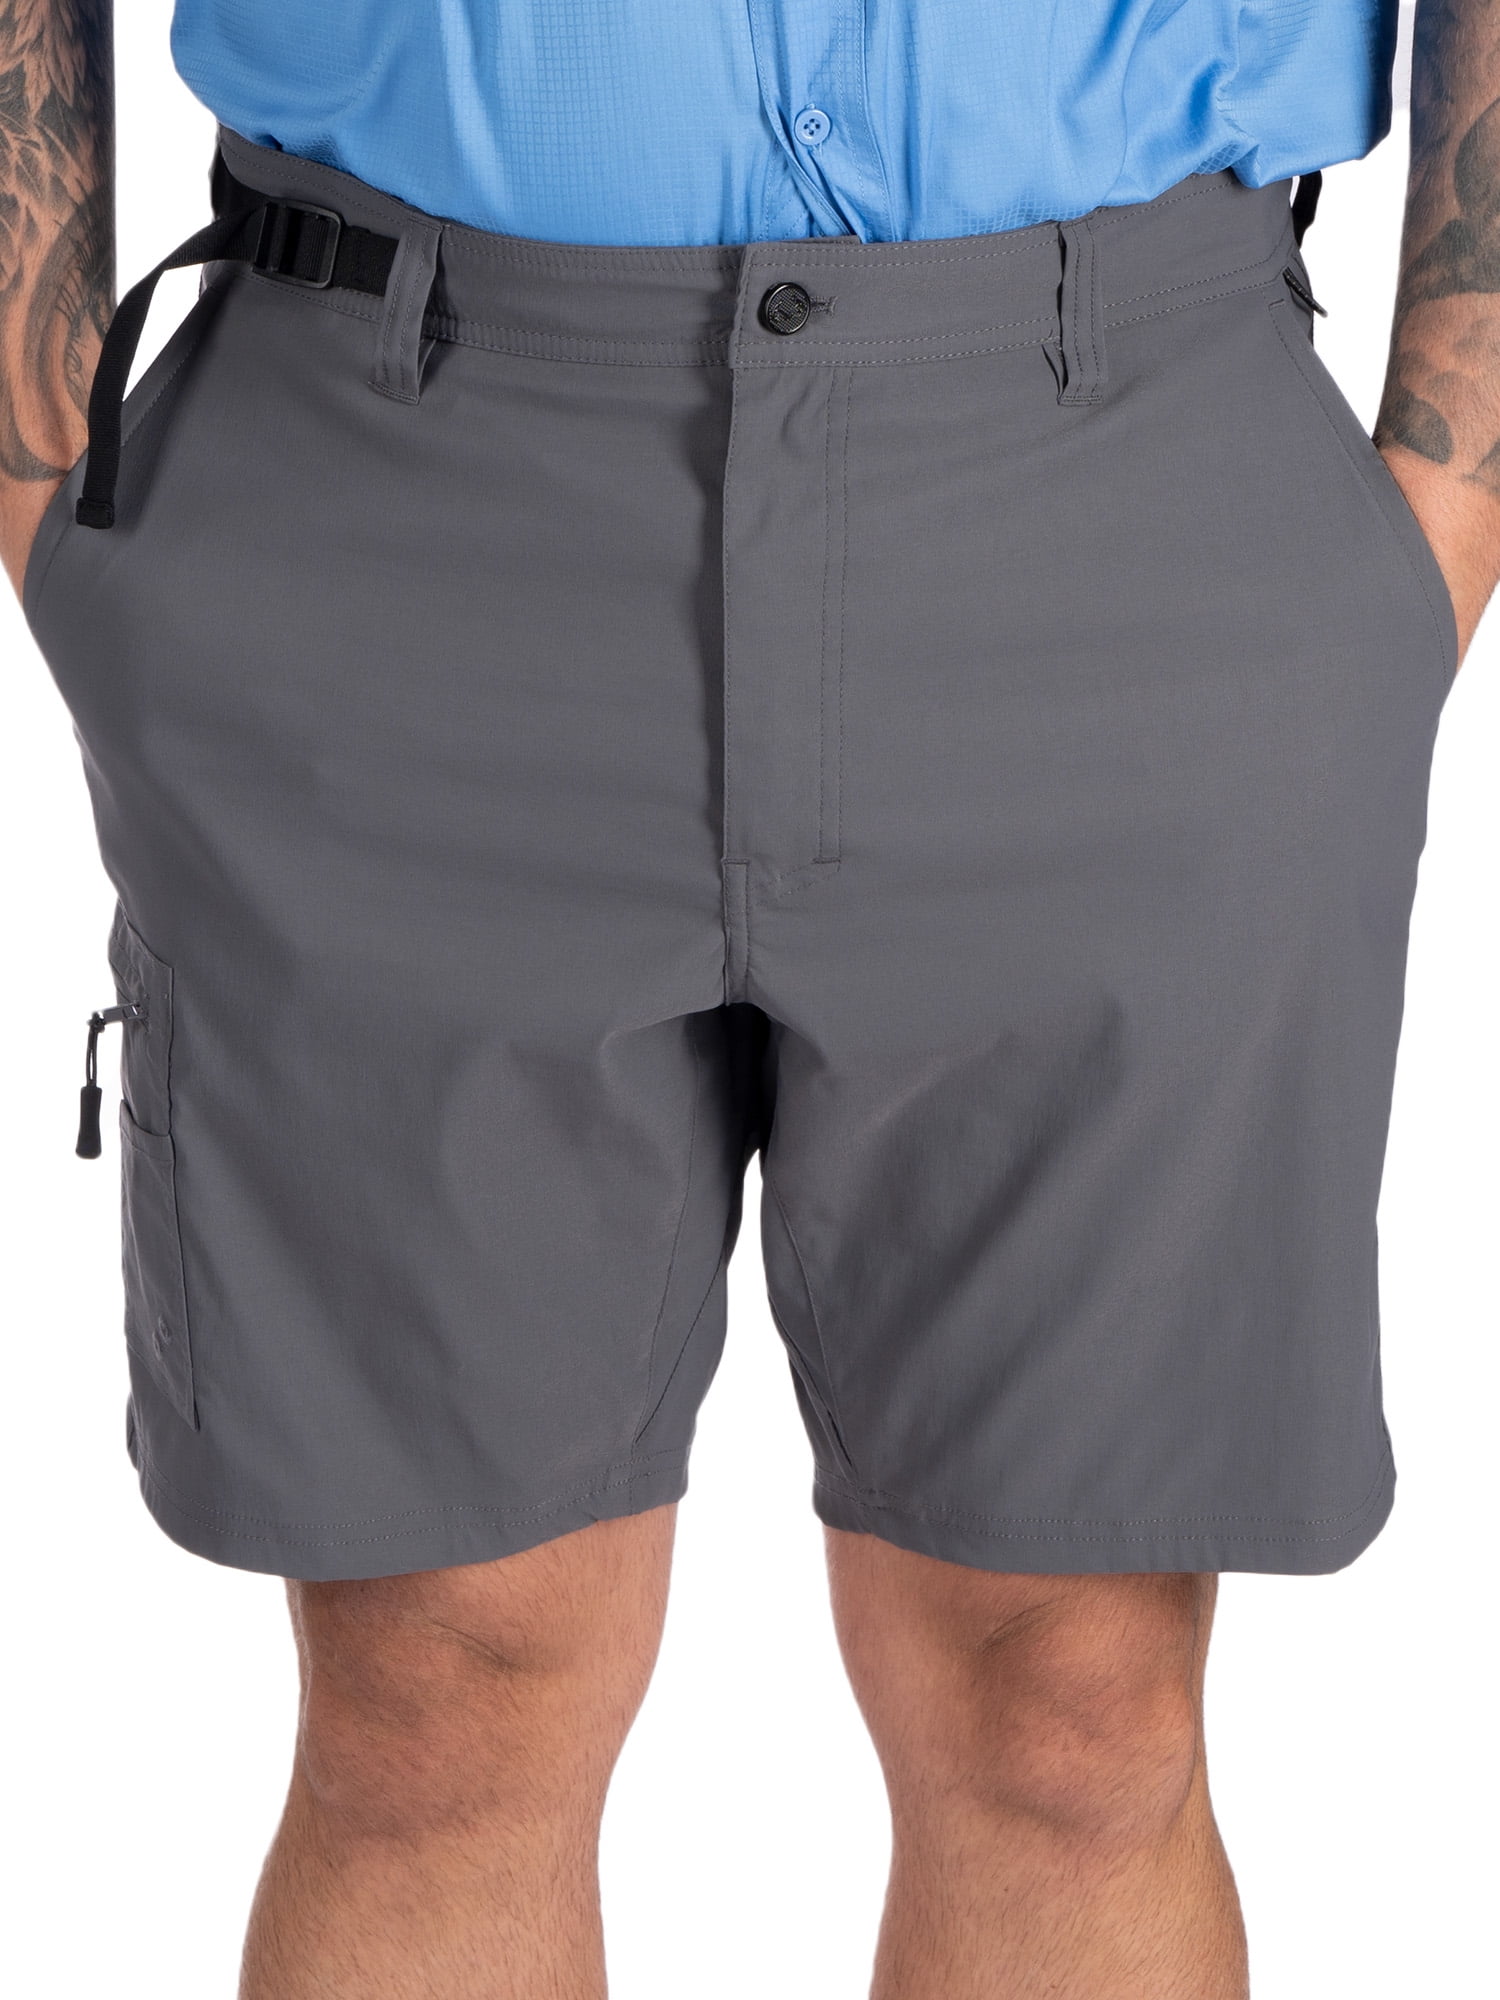 Realtree Men's Hybrid Fishing Shorts, Athletic Performance Short Pants ...